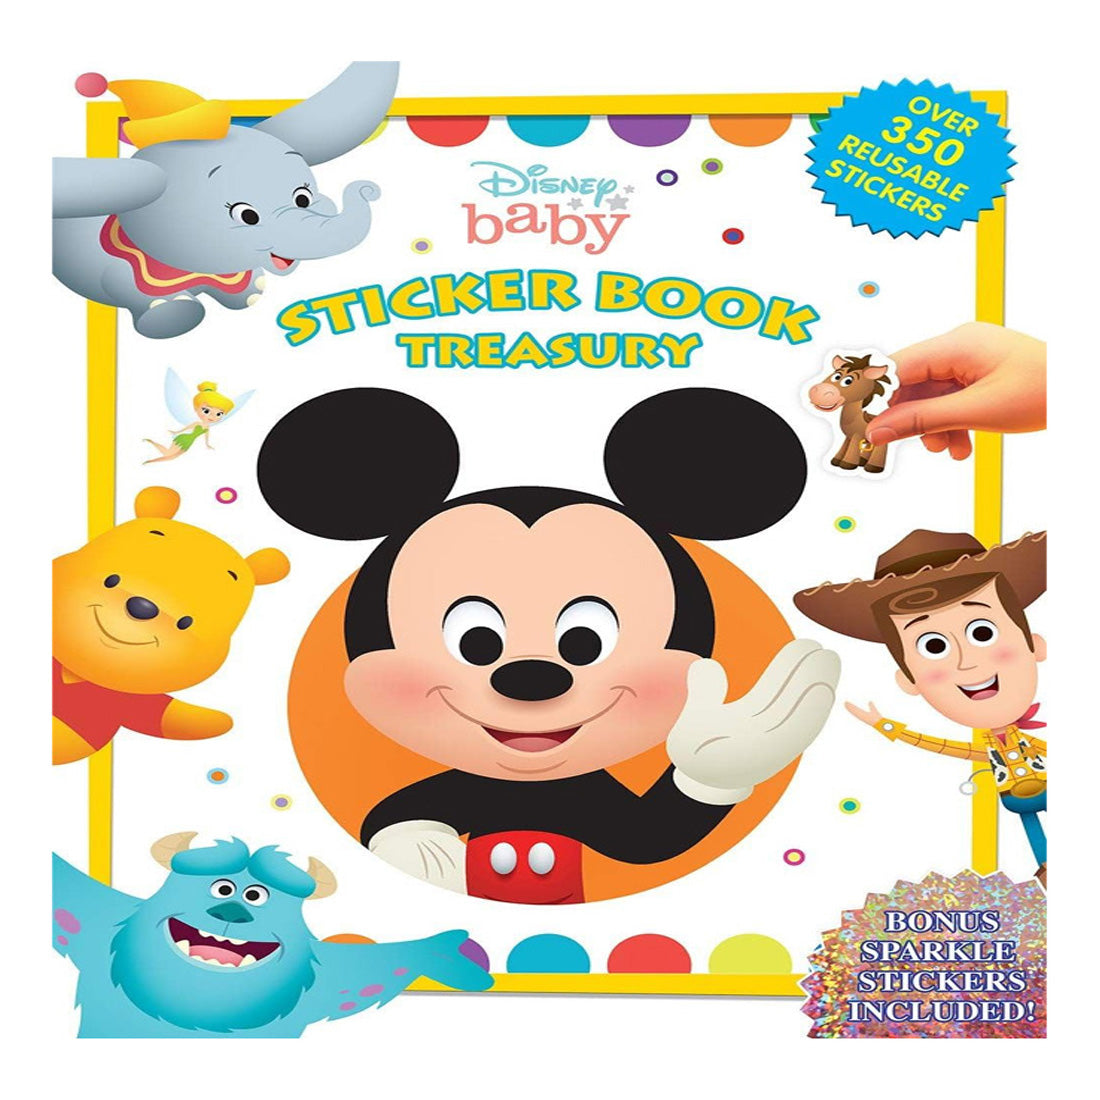 Disney Baby: Sticker Book Treasury